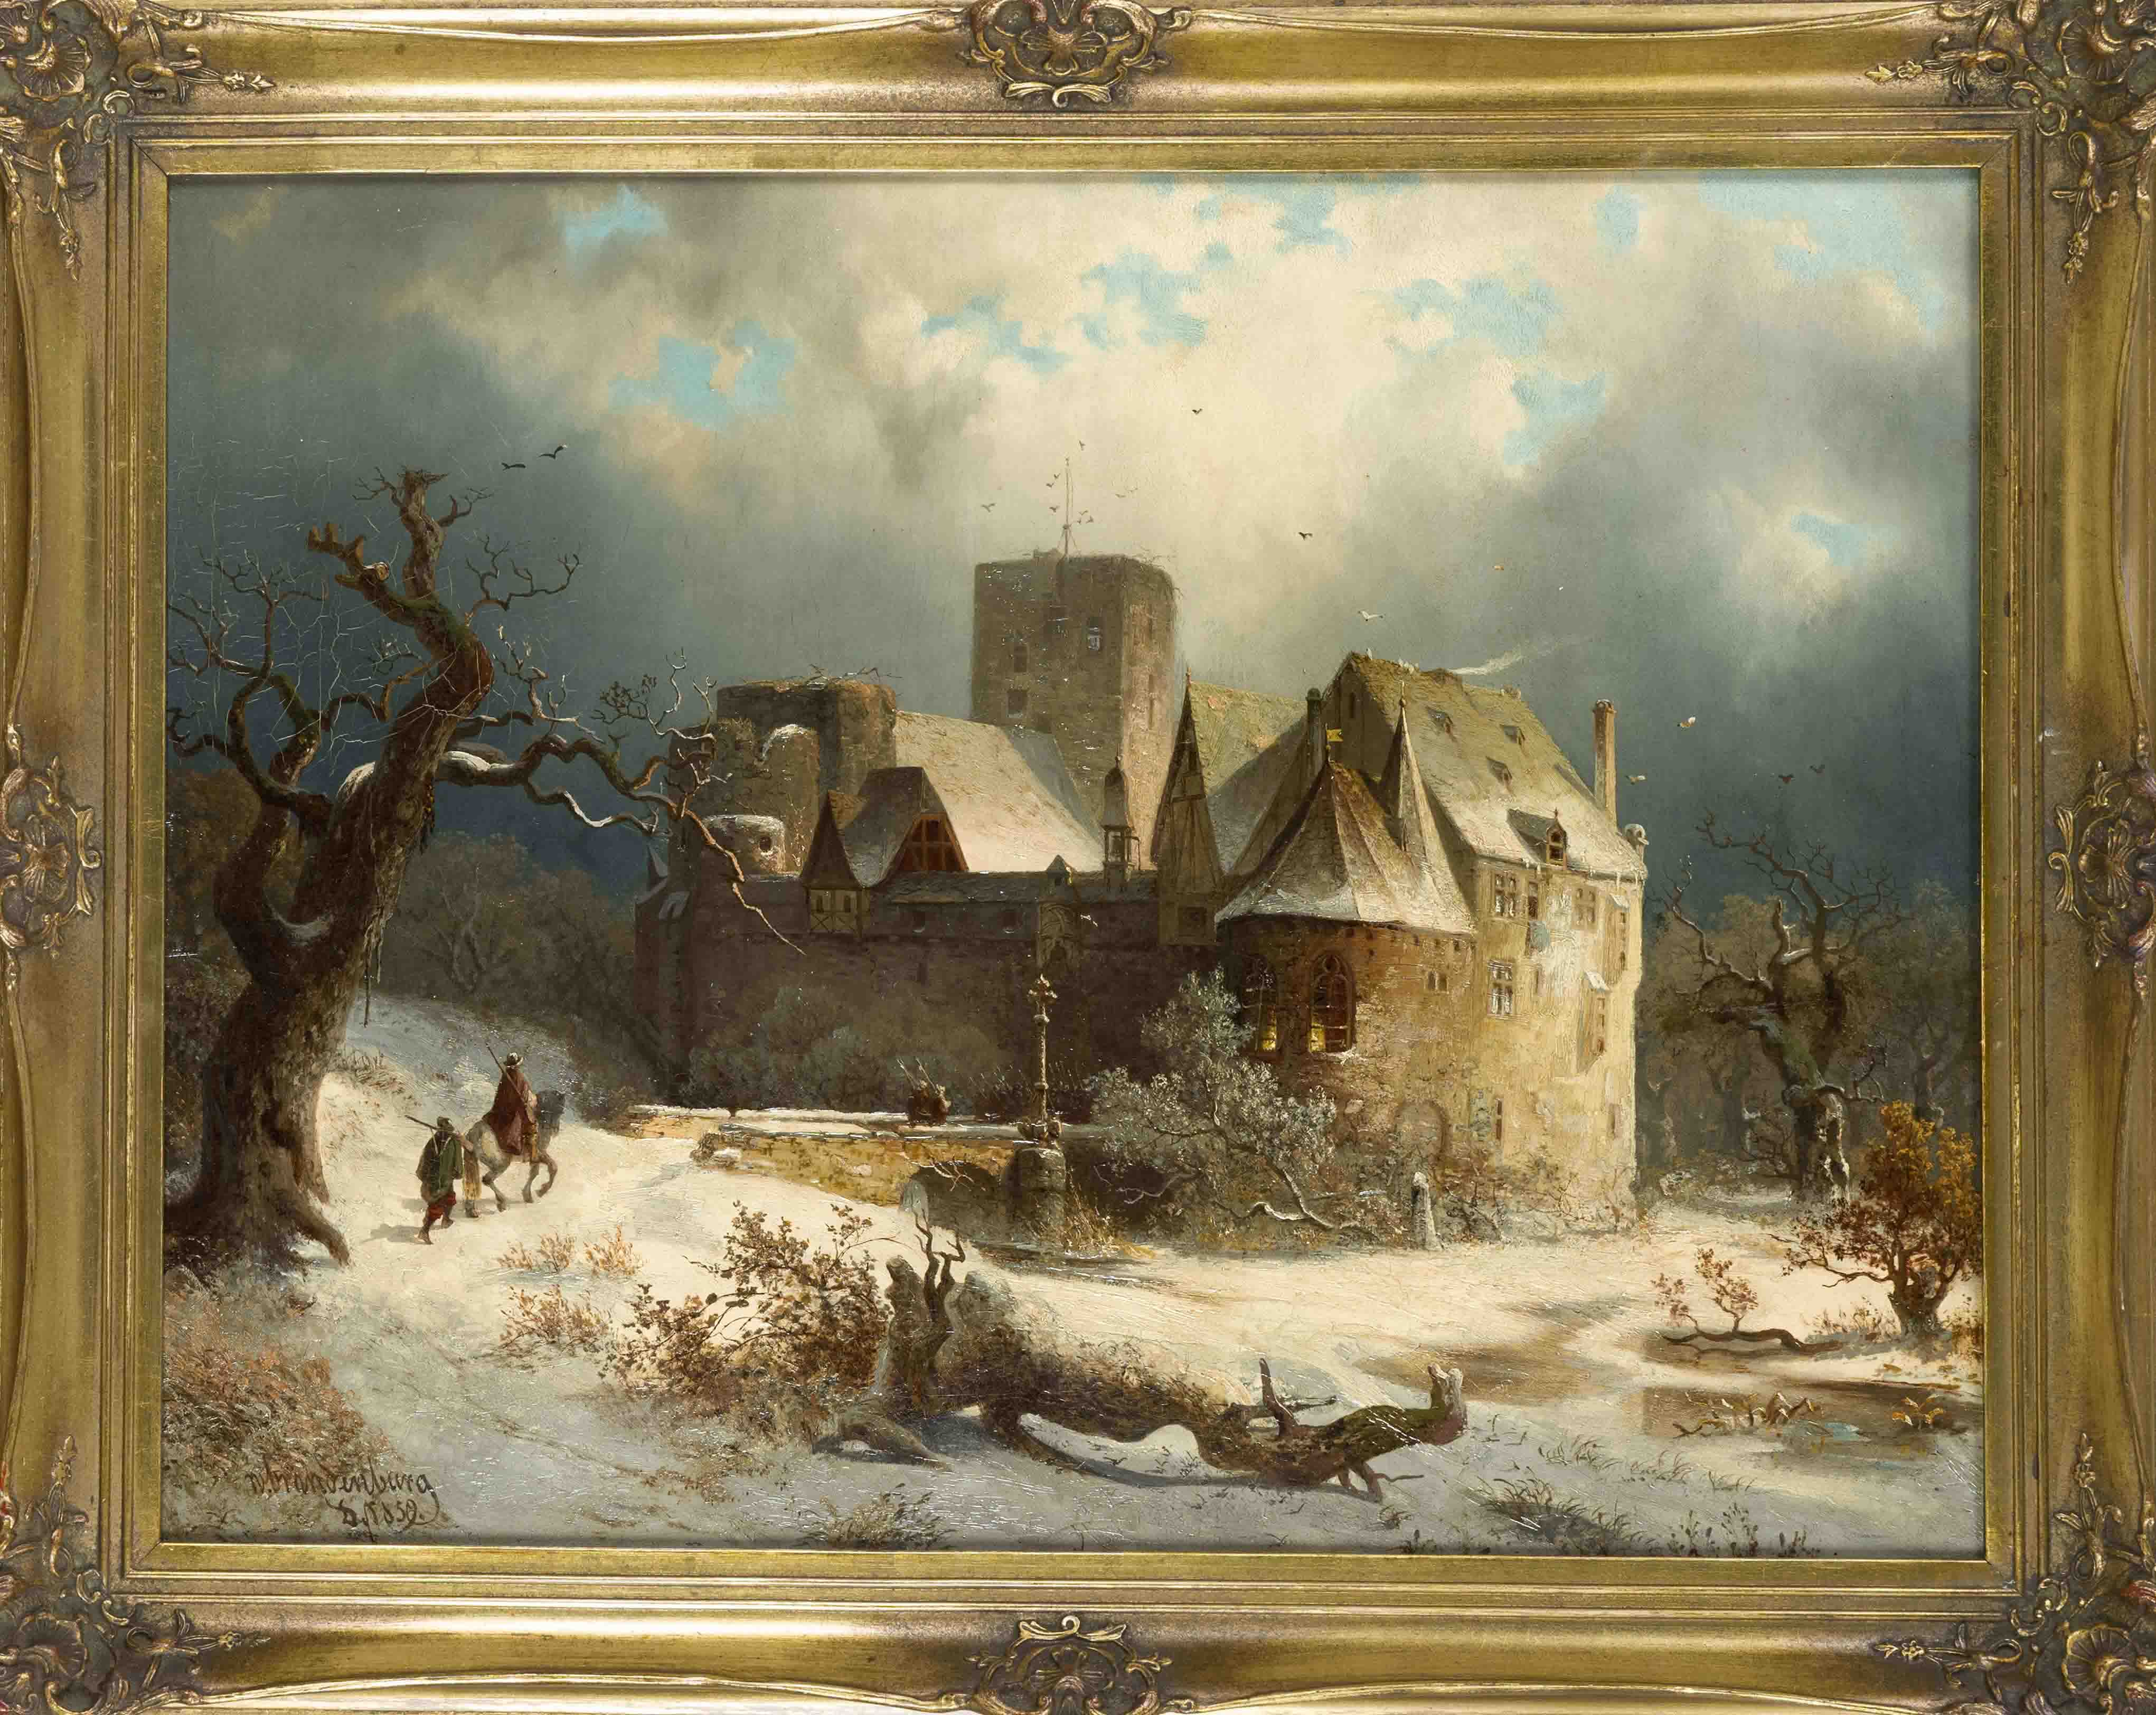 Wilhelm Brandenburg (1824-1901), Düsseldorf painter, two people approaching a castle in a romantic